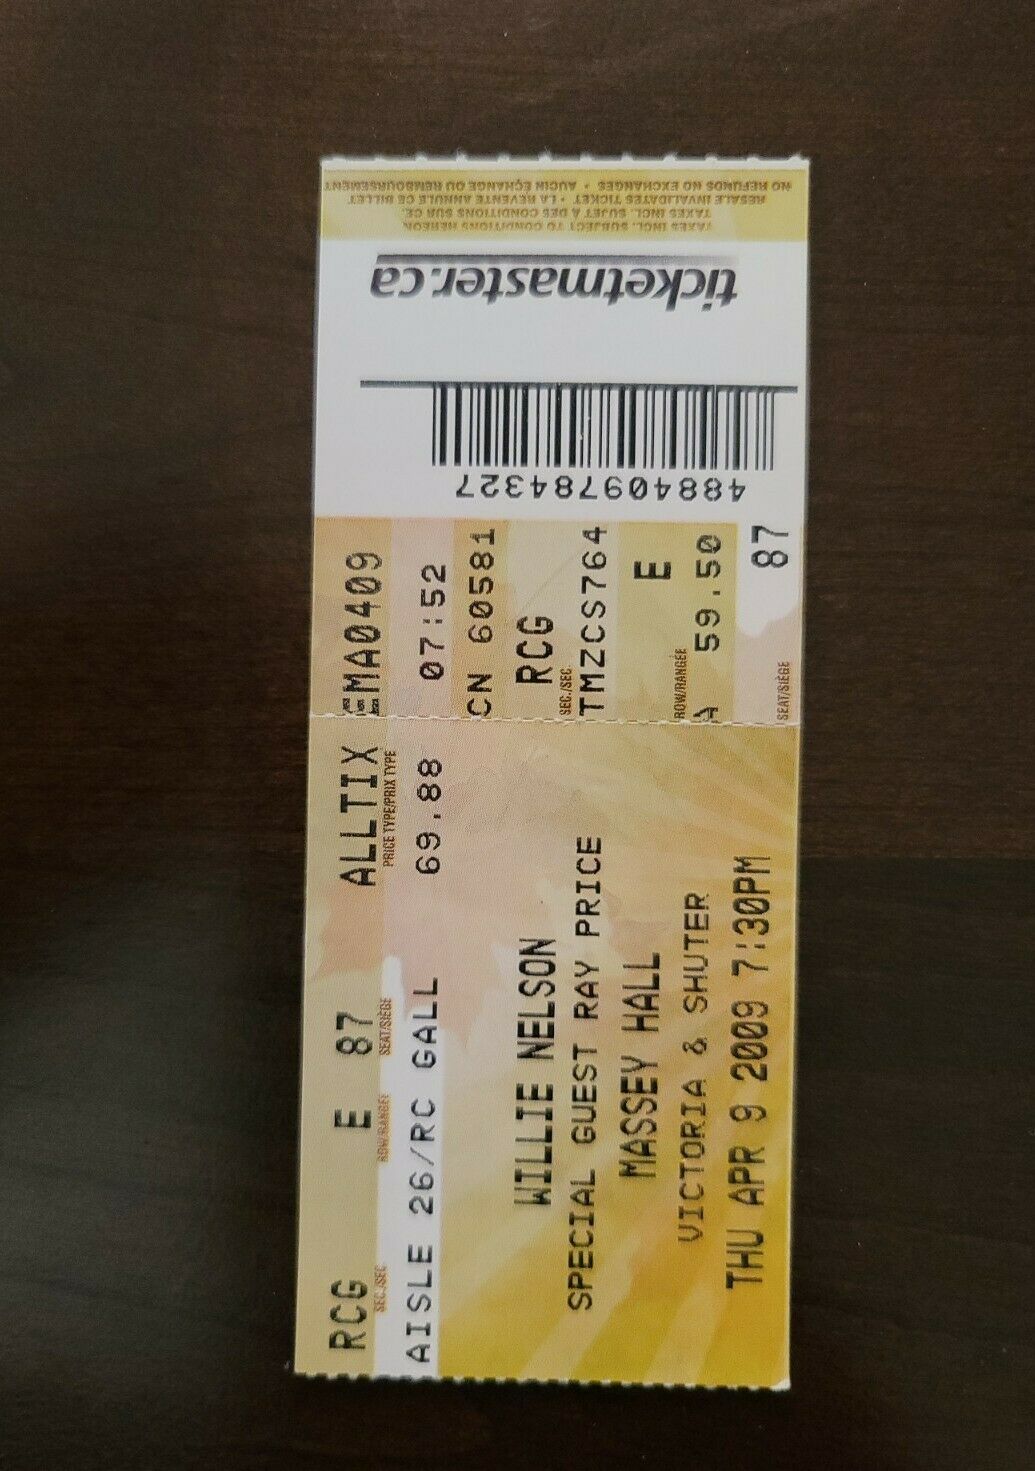 Willie Nelson 2009, Toronto Massey Hall Original Concert Ticket Stub